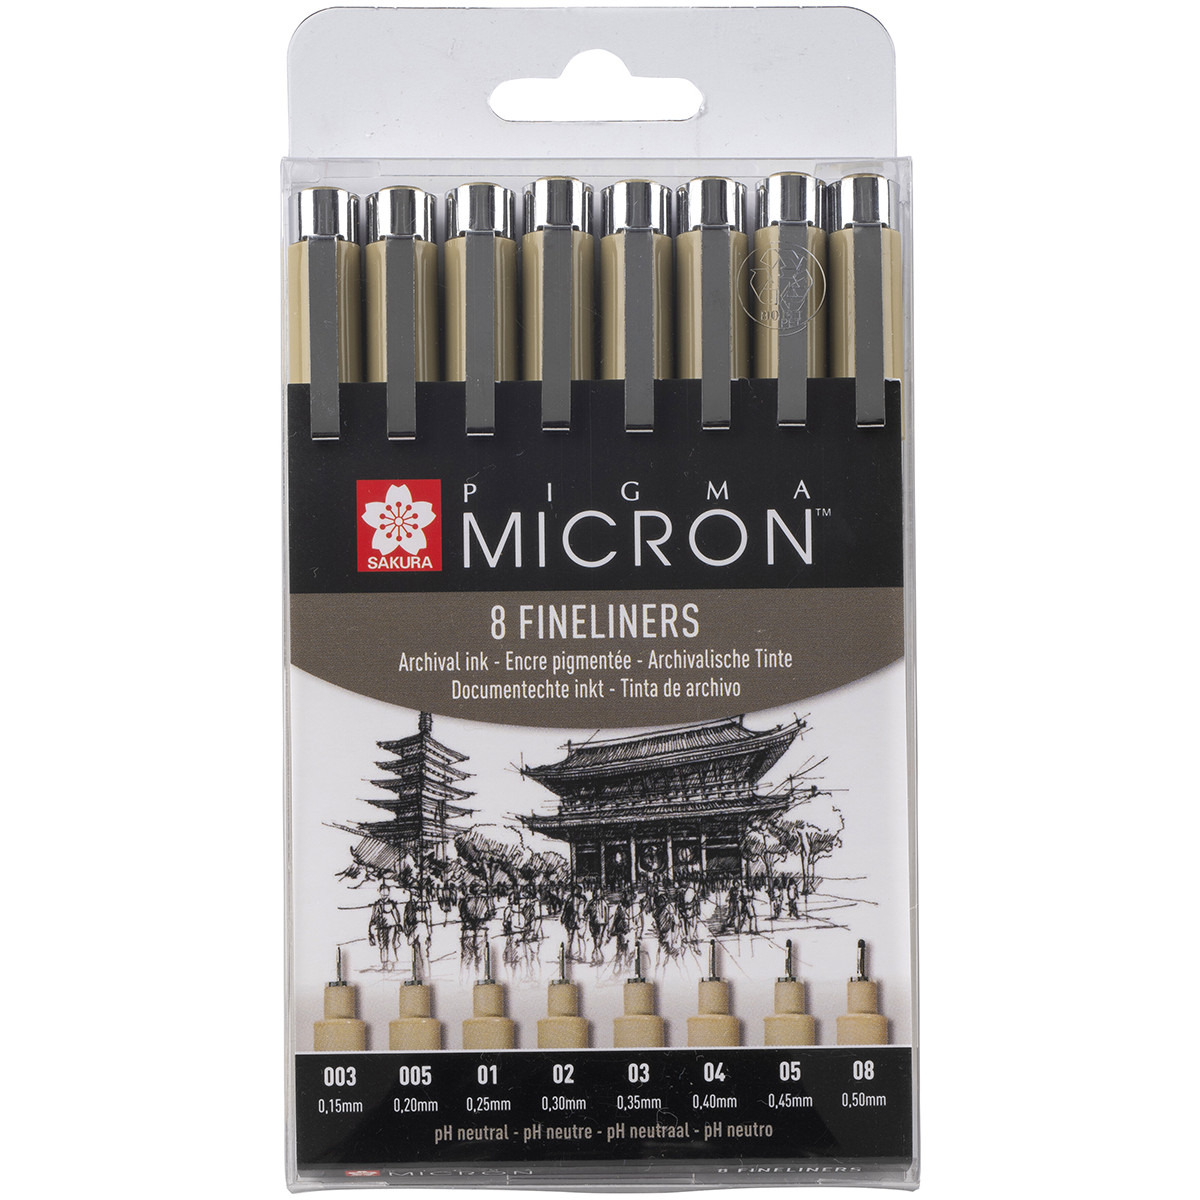 Sakura Pigma Micron Pen Set - Black - Assorted Tip Sizes (Pack of 8)